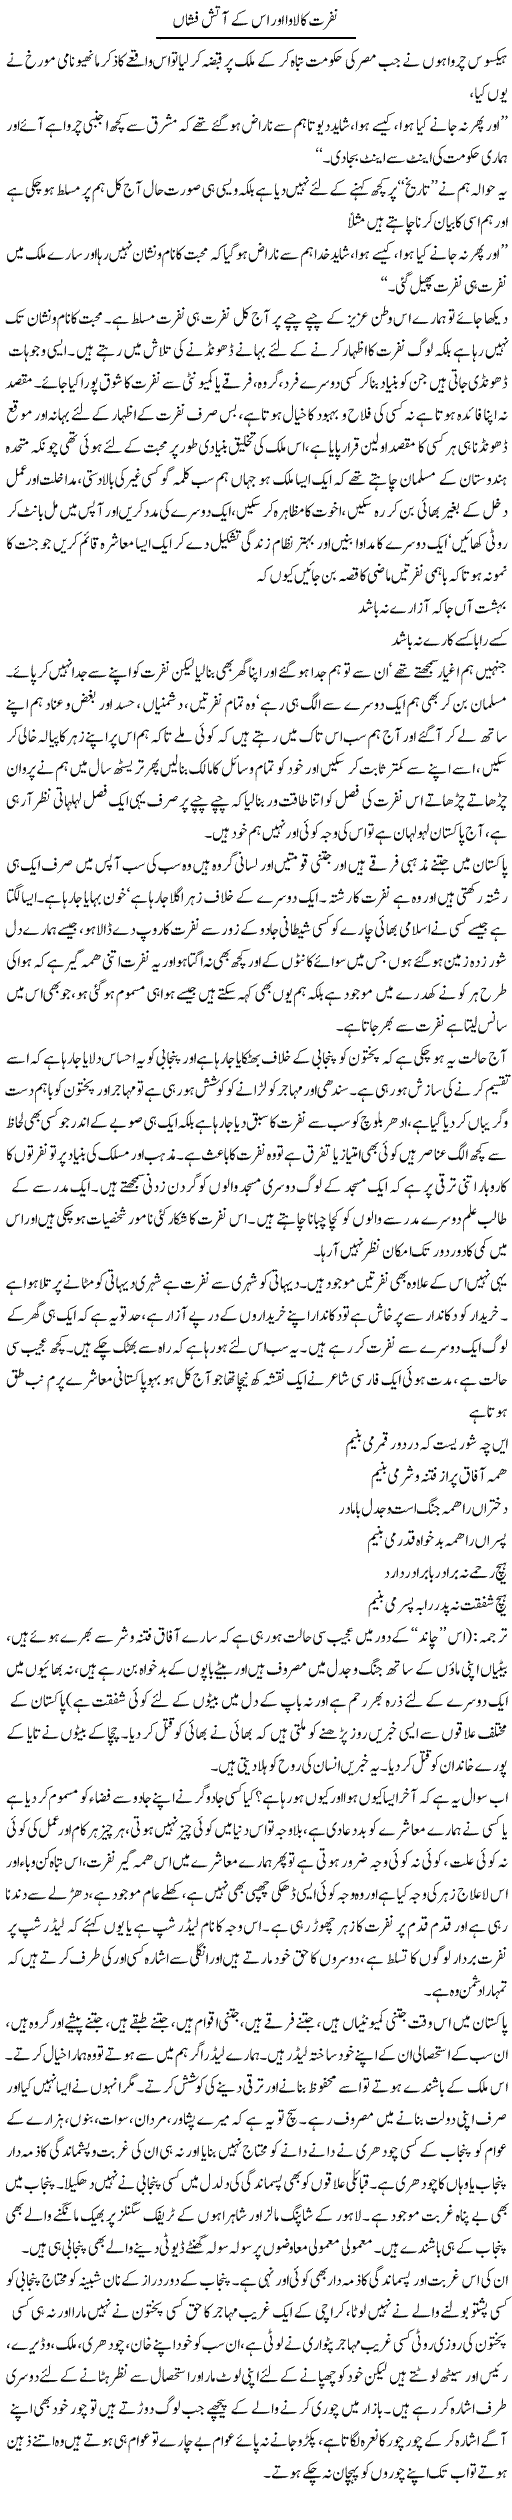 Hatred in Pakistan Express Column Saadullah Barq 13 August 2011